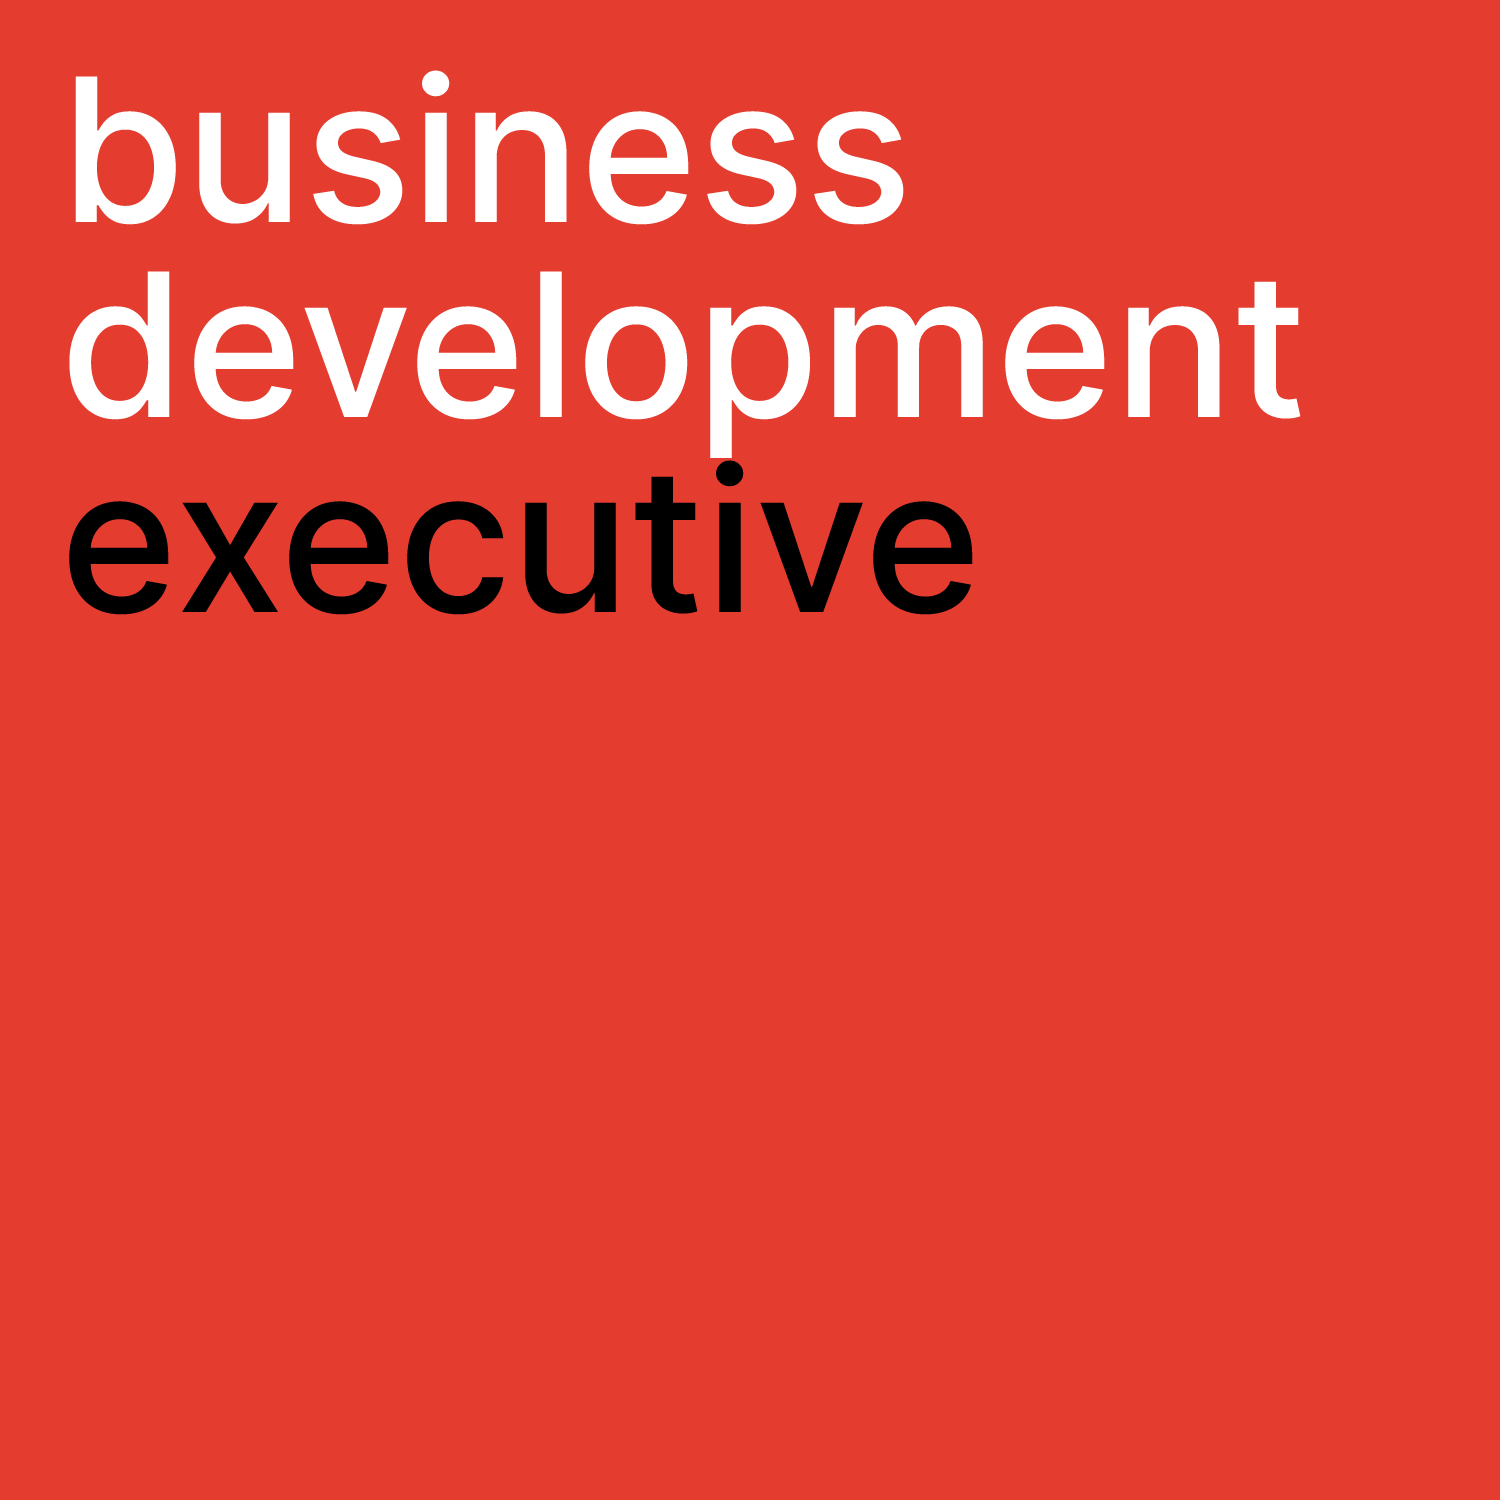 business development executive